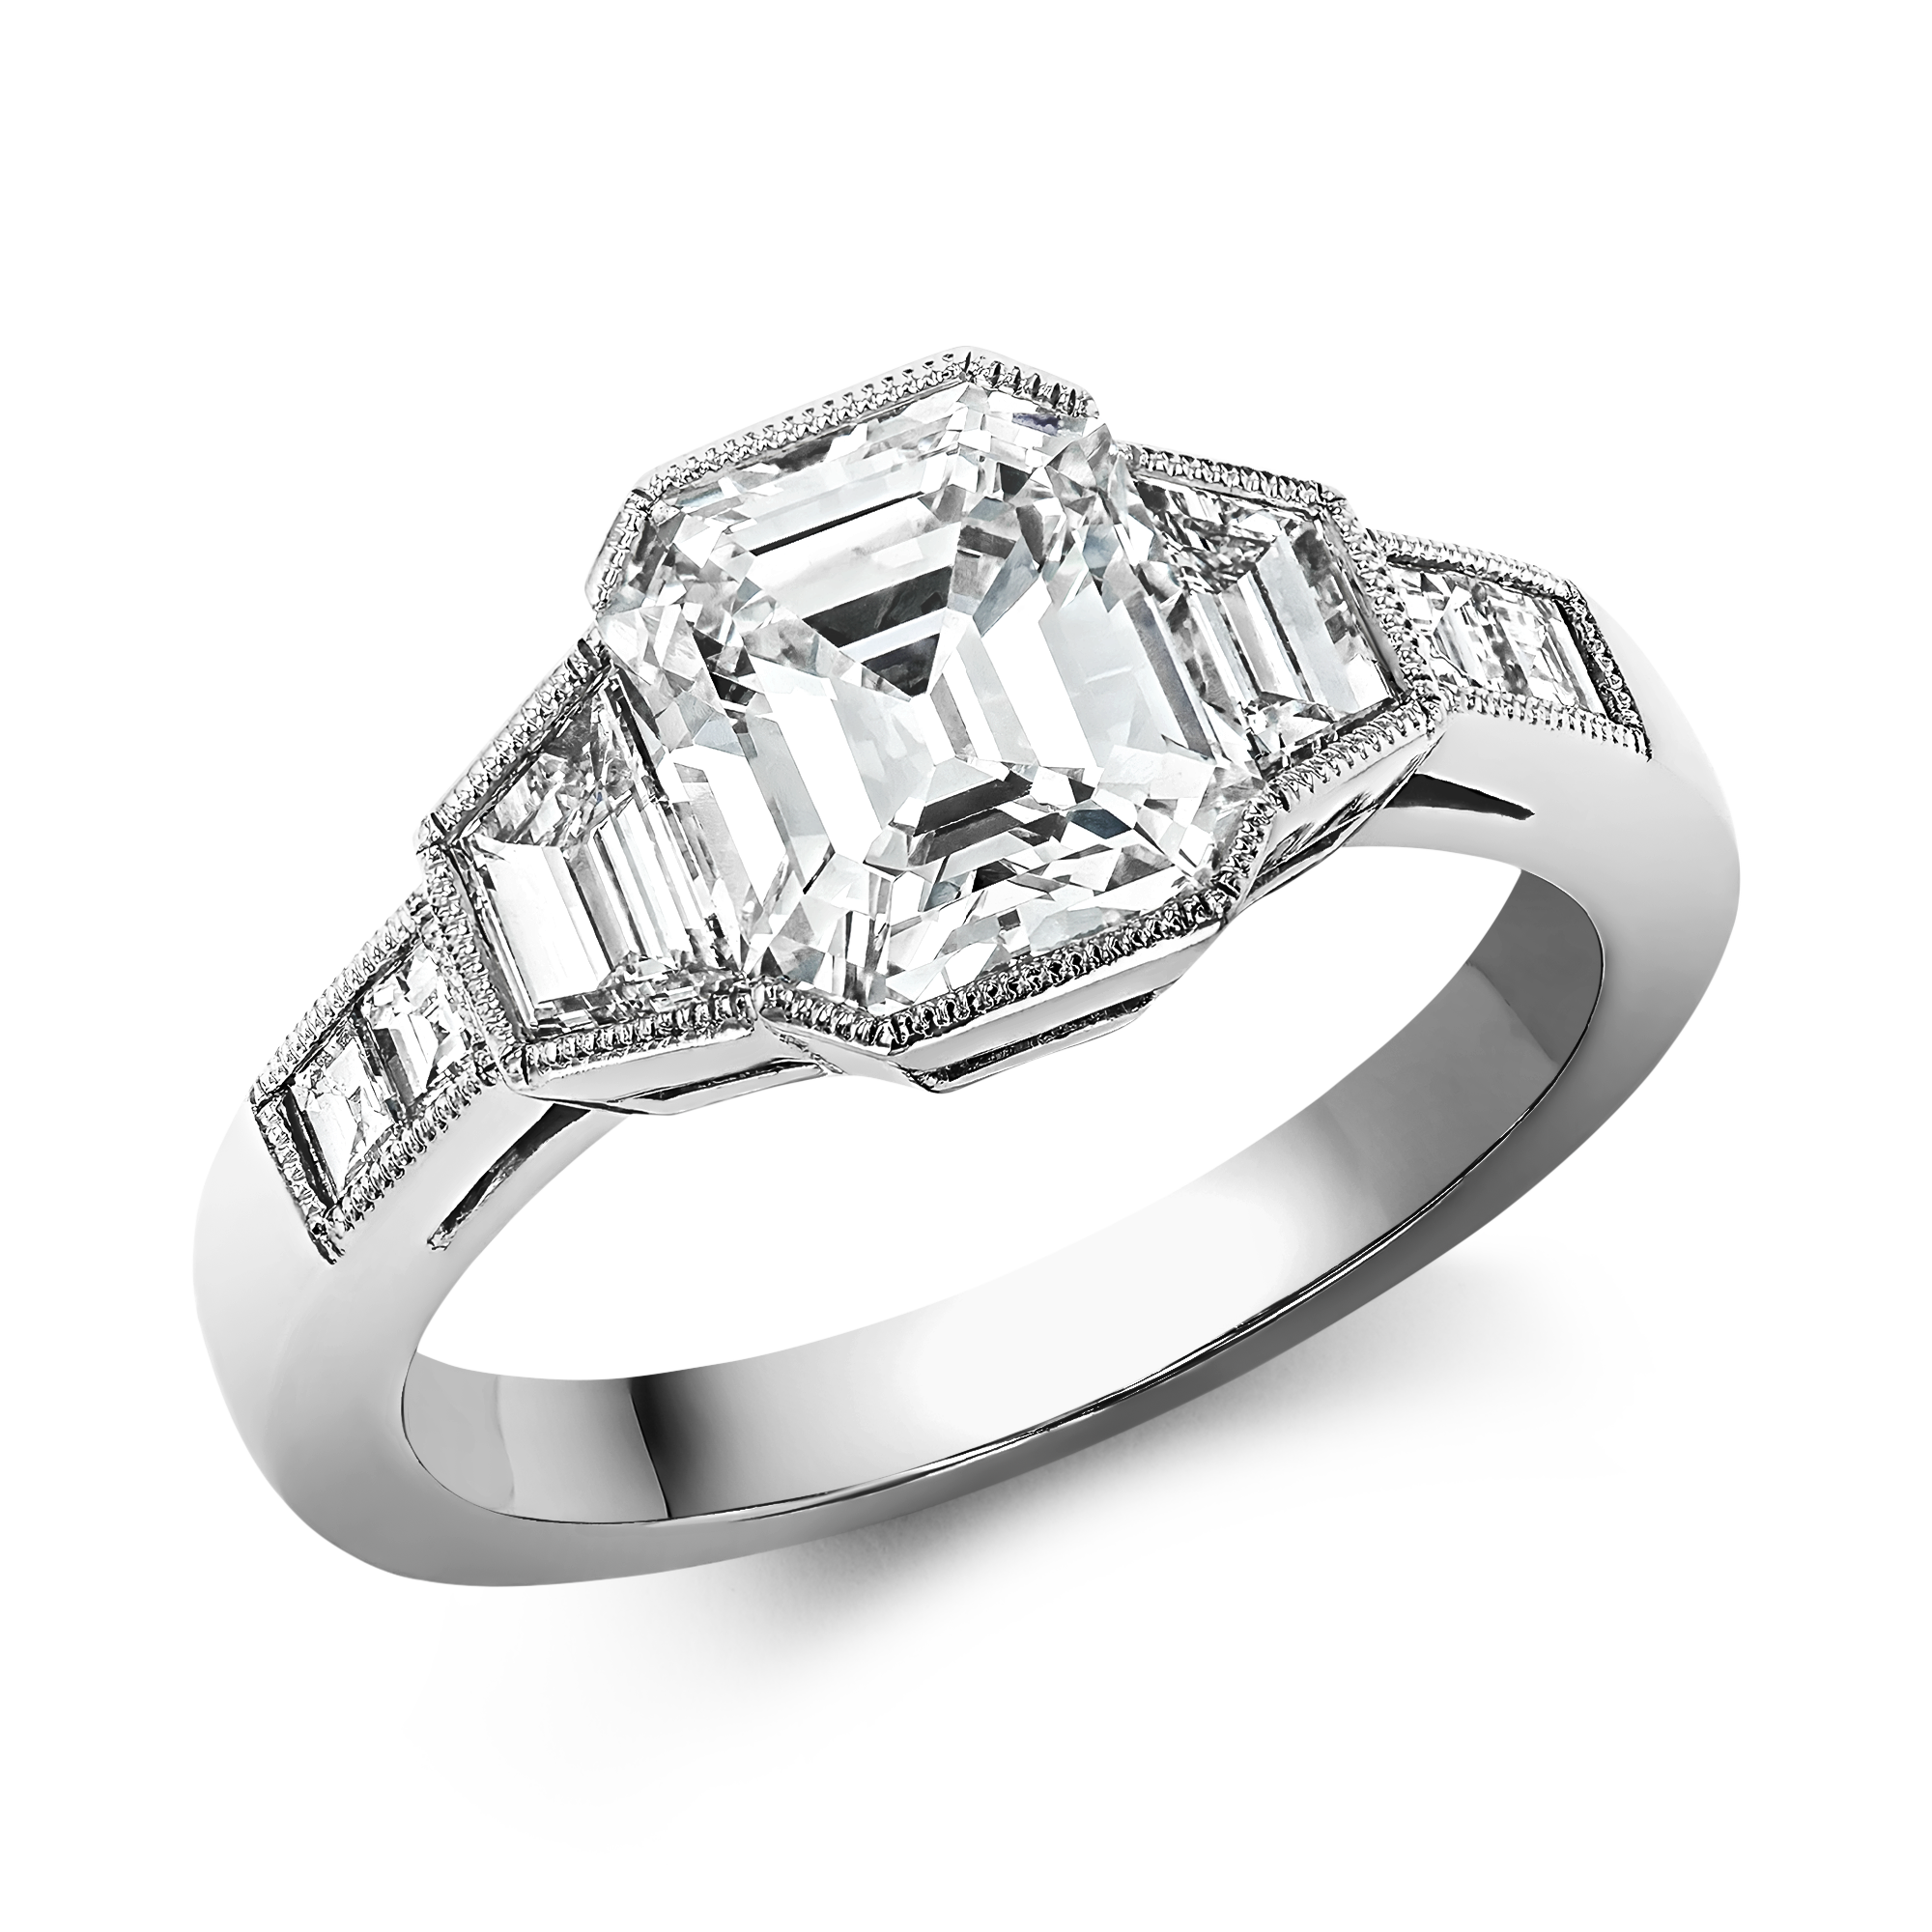 Art Deco Style Diamond Ring Emerald Cut, Milegrain Set_1